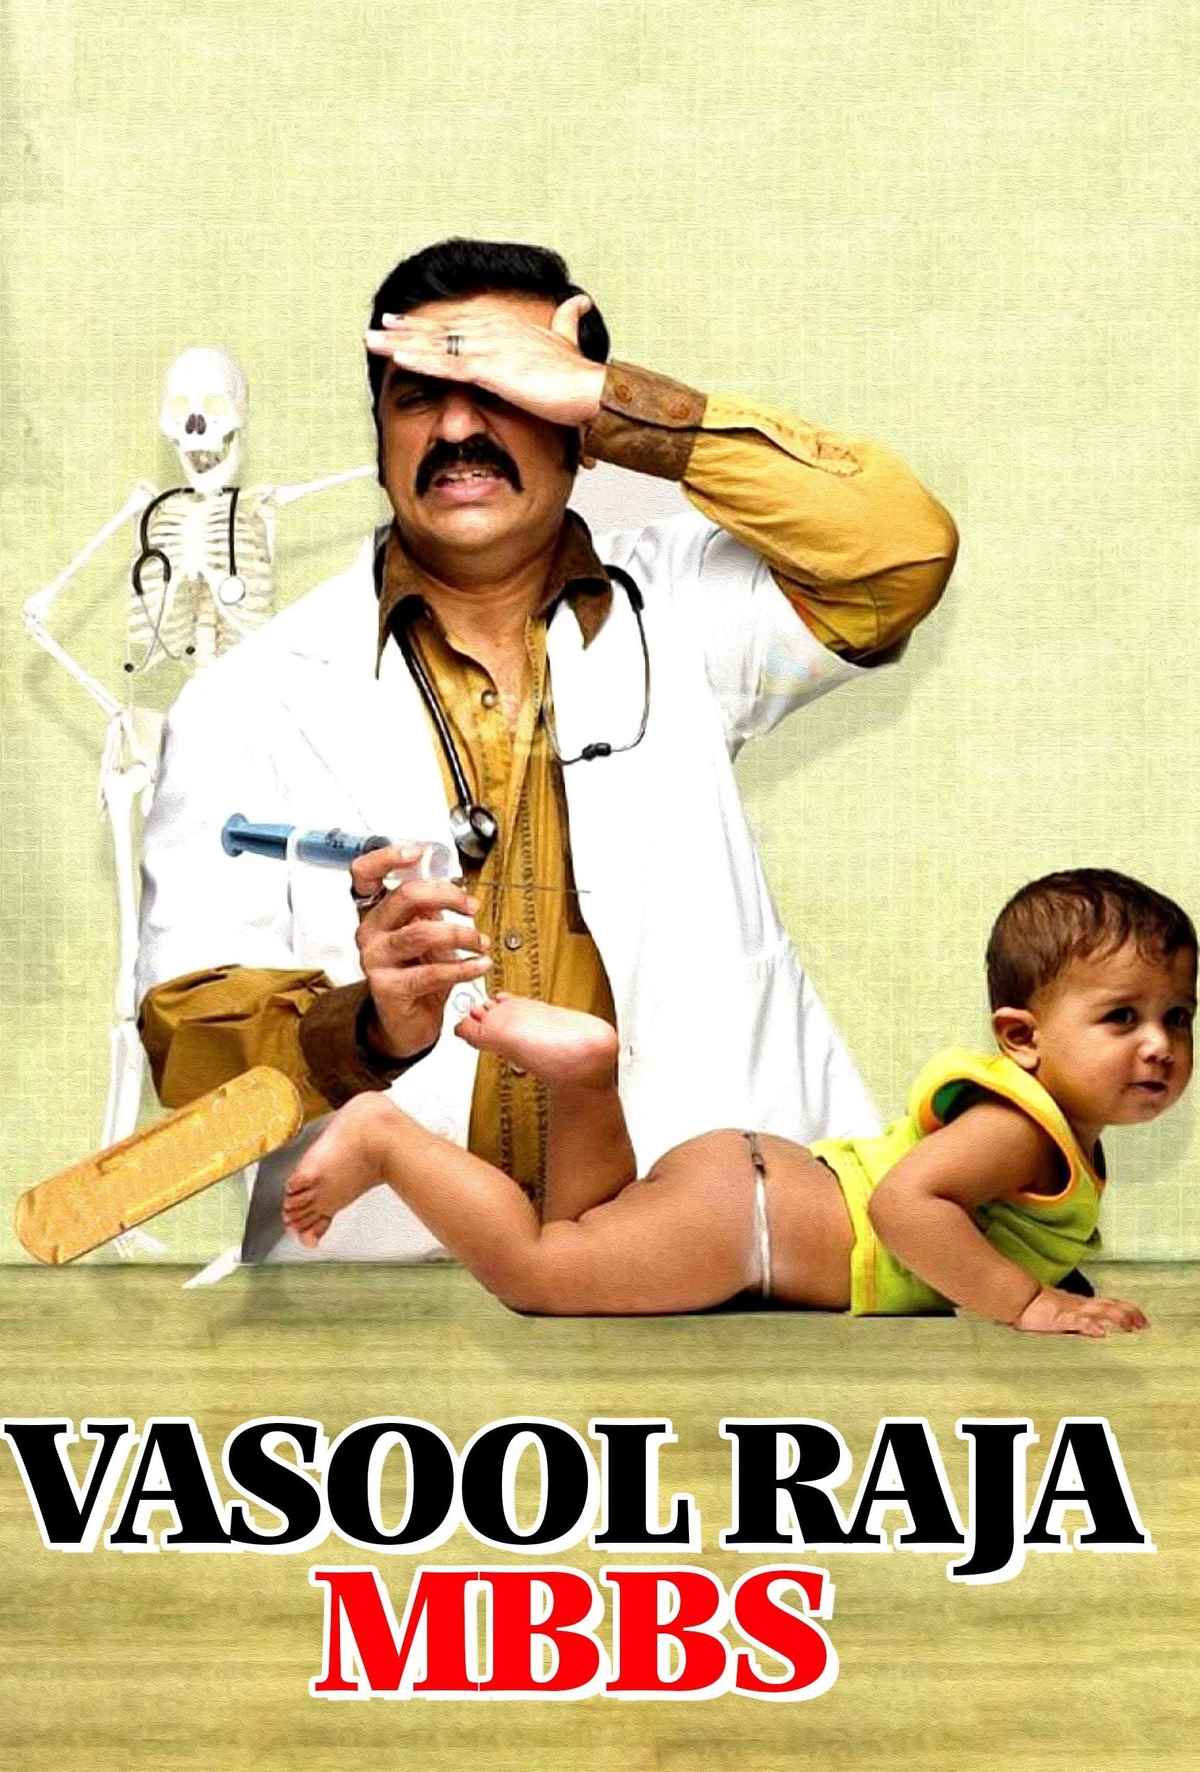 Movie doctor online tamil watch 10 Sites